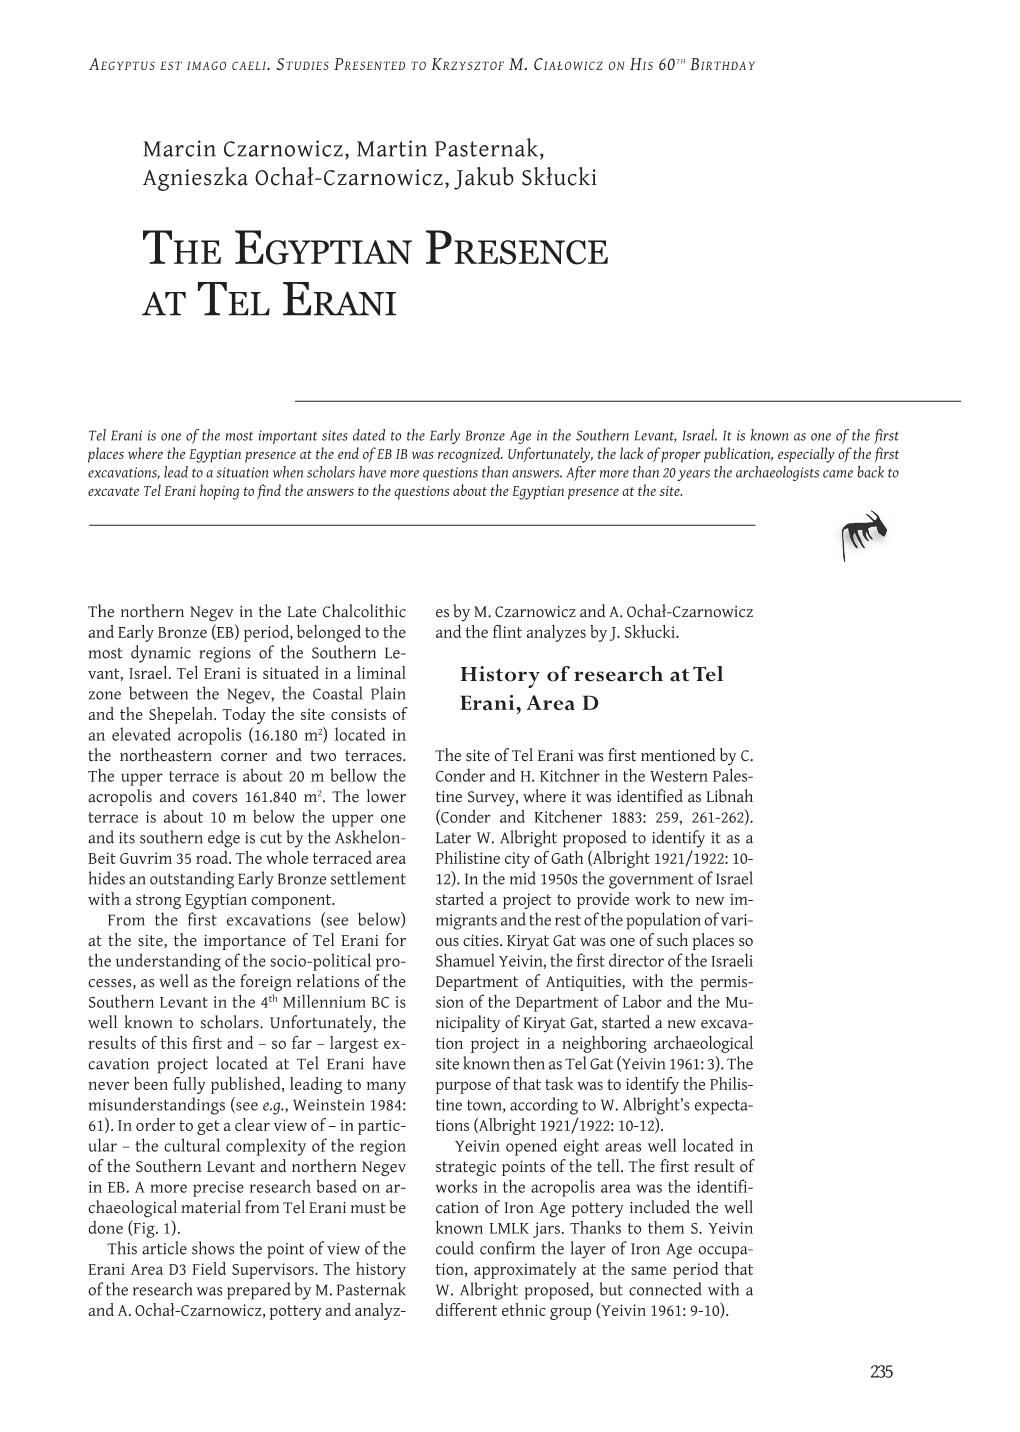 The Egyptian Presence at Tel Erani